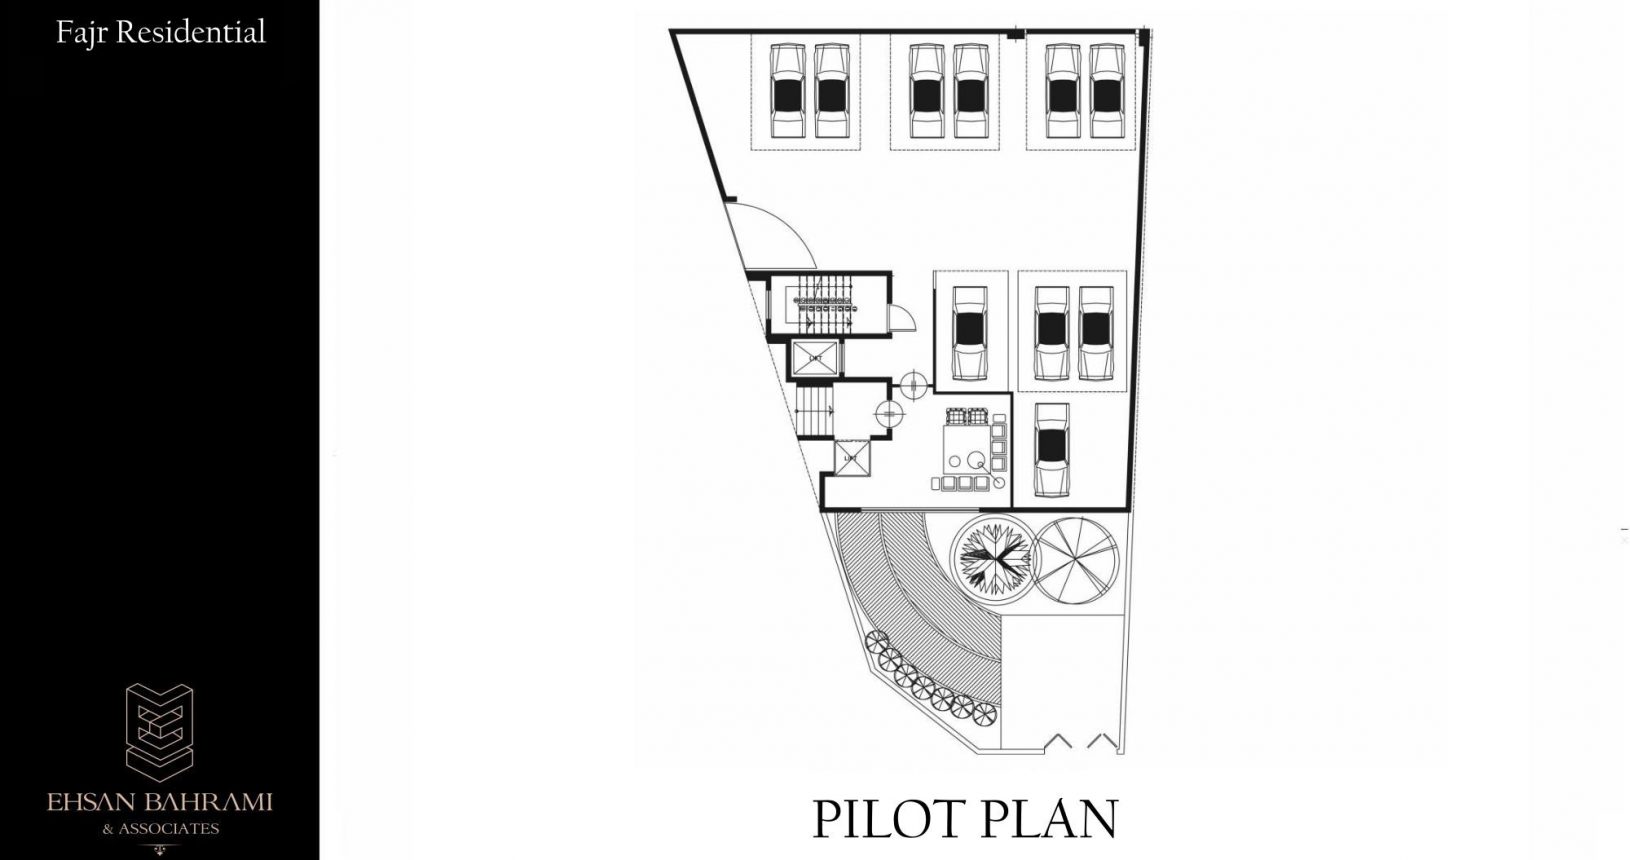 Fajr Residential Building Pilot Plan01 (2)